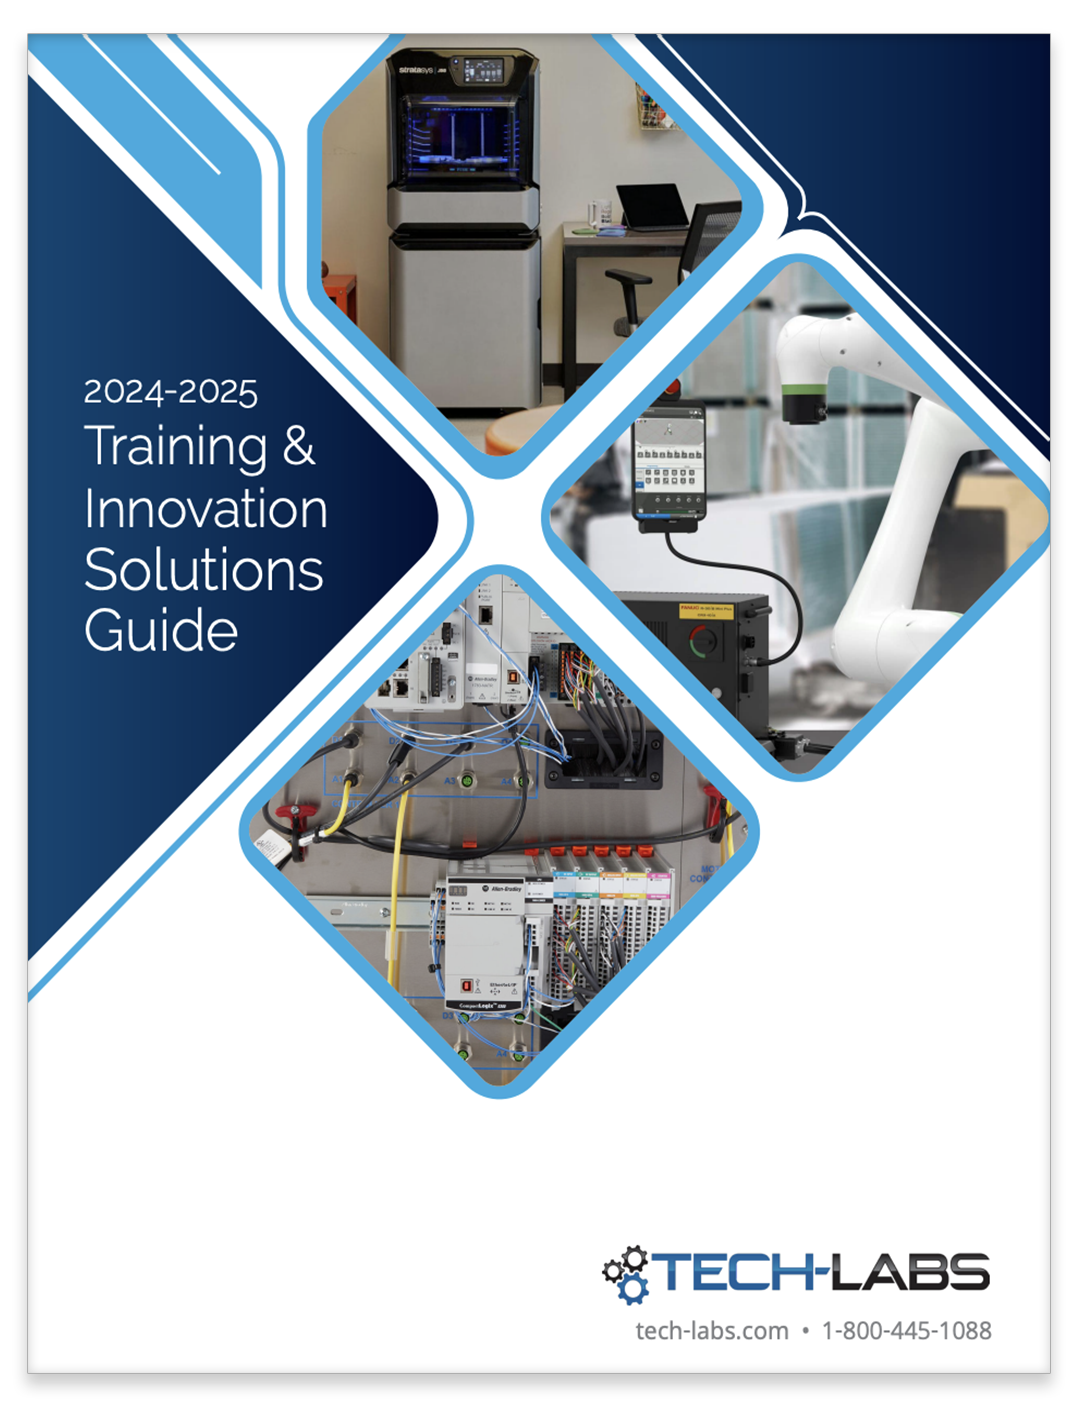 Training & Innovation Solutions Guide